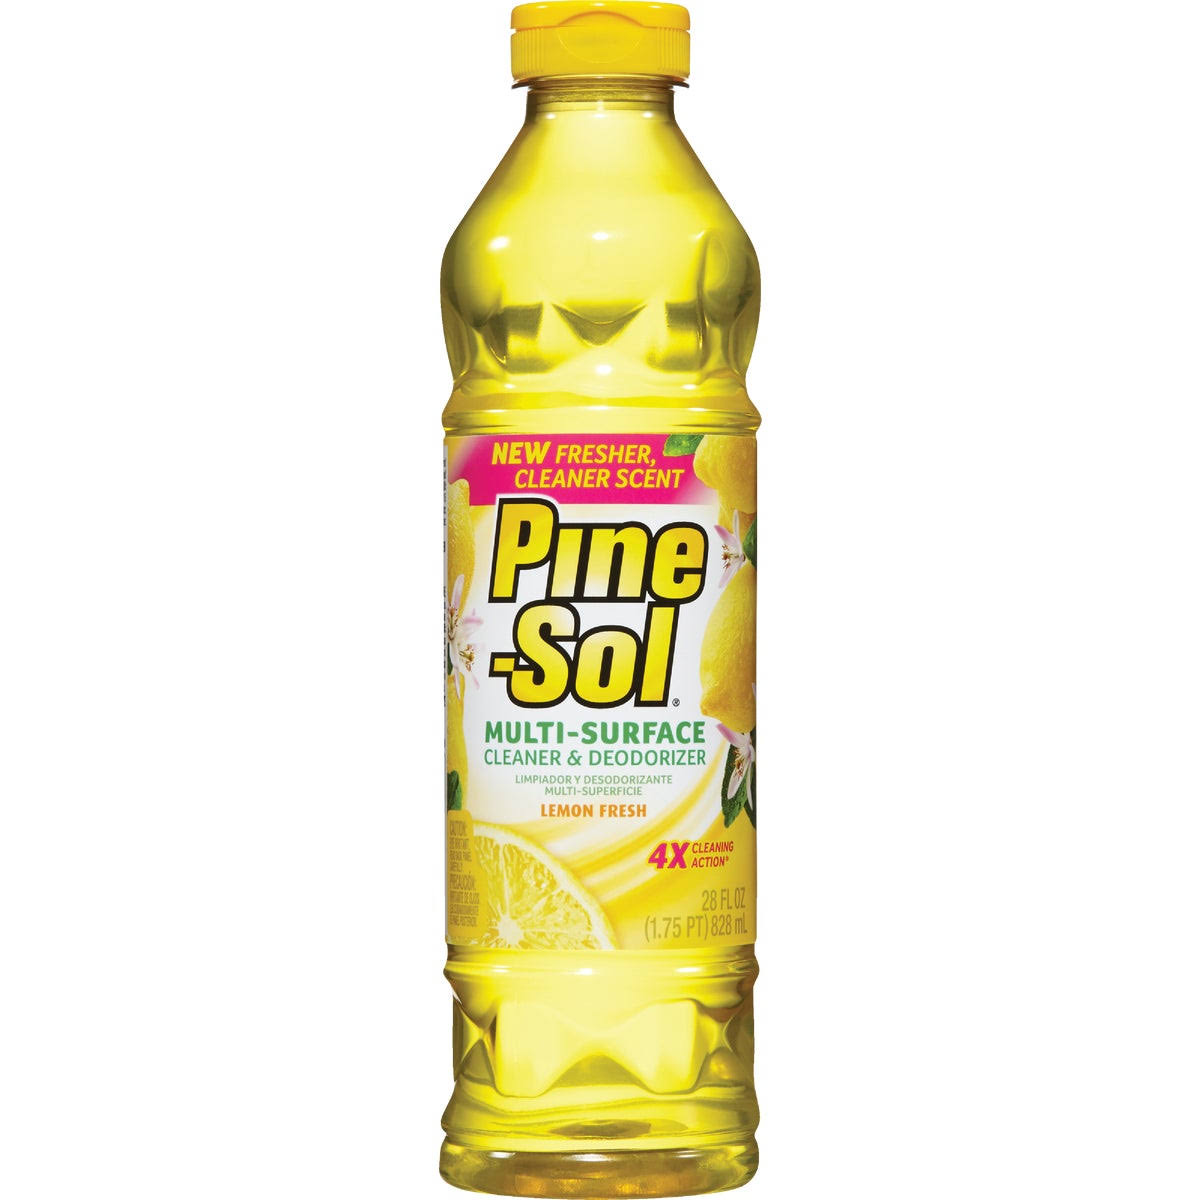 Pine-Sol Lemon Fresh Multi-Surface Cleaner & Deodorizer